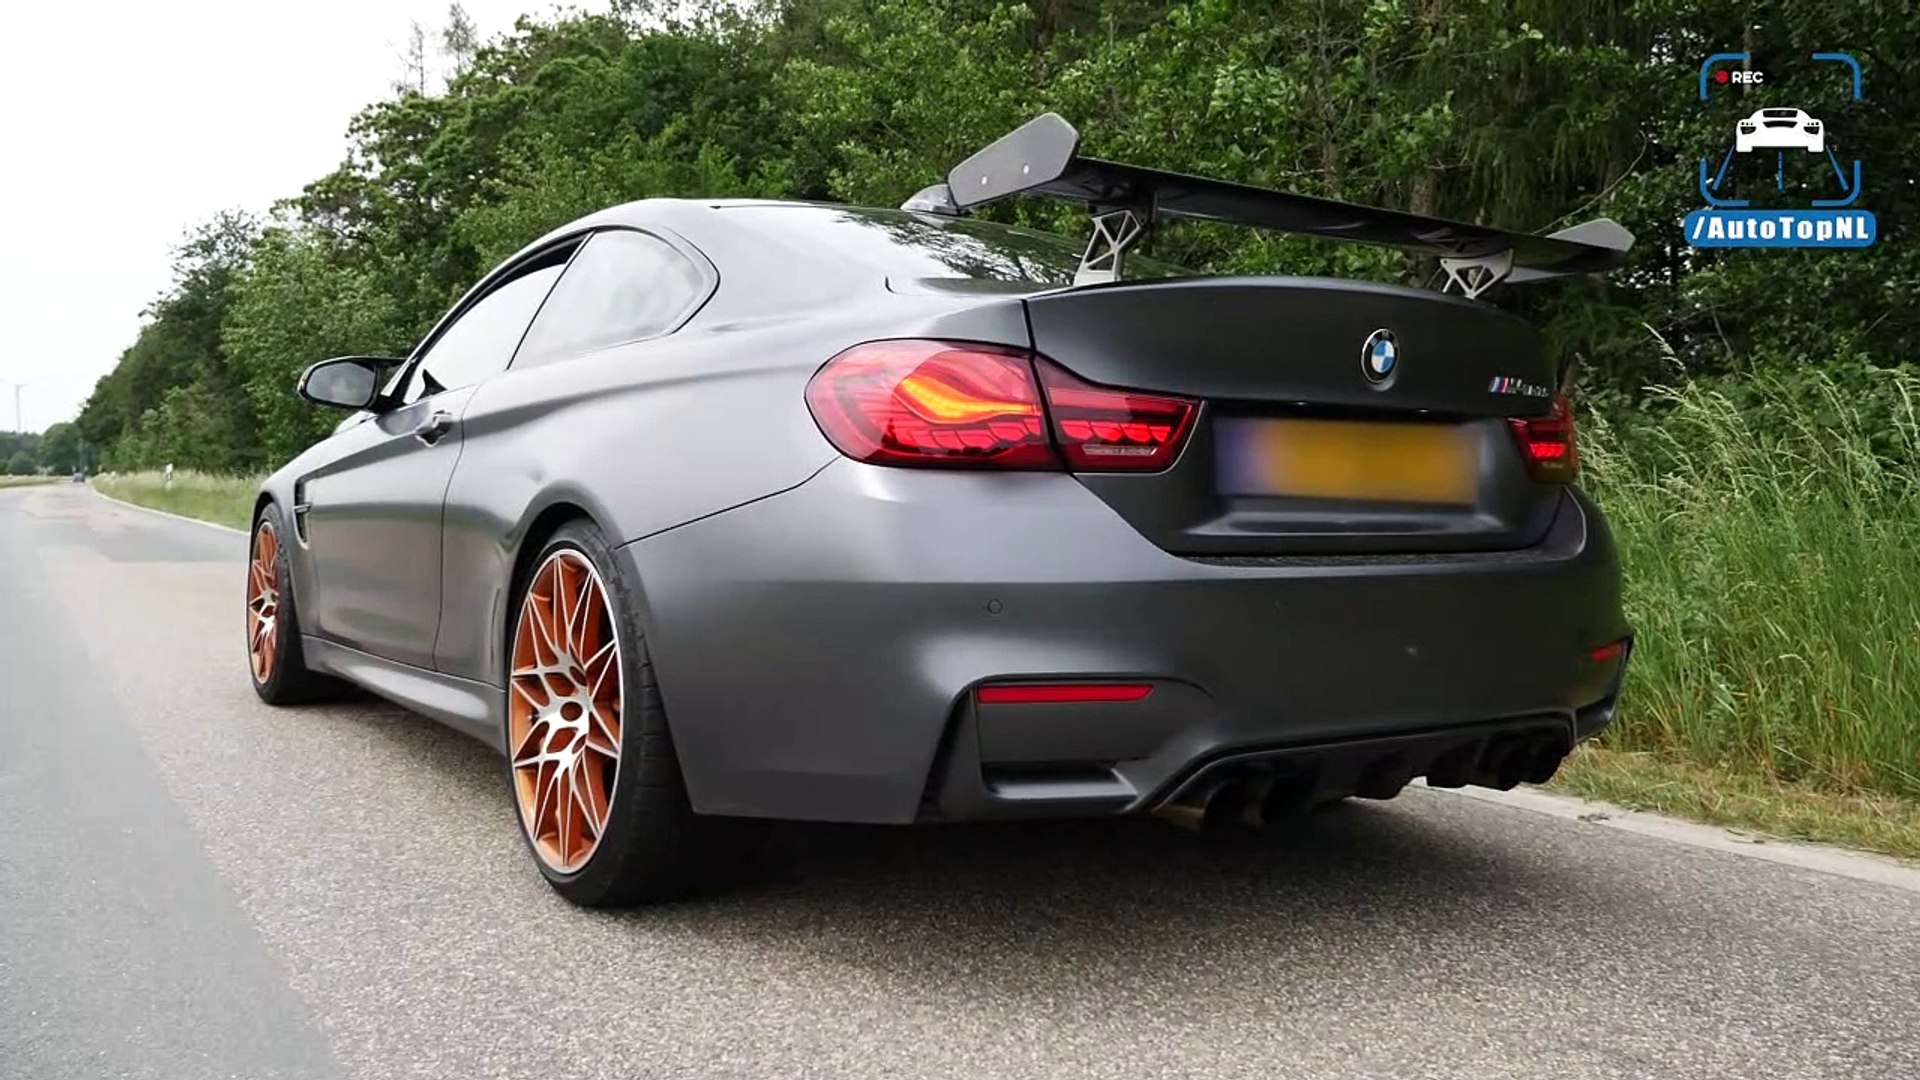 BMW M4 GTS SUPER LOUD! Exhaust SOUND REVS & ONBOARD by AutoTopNL